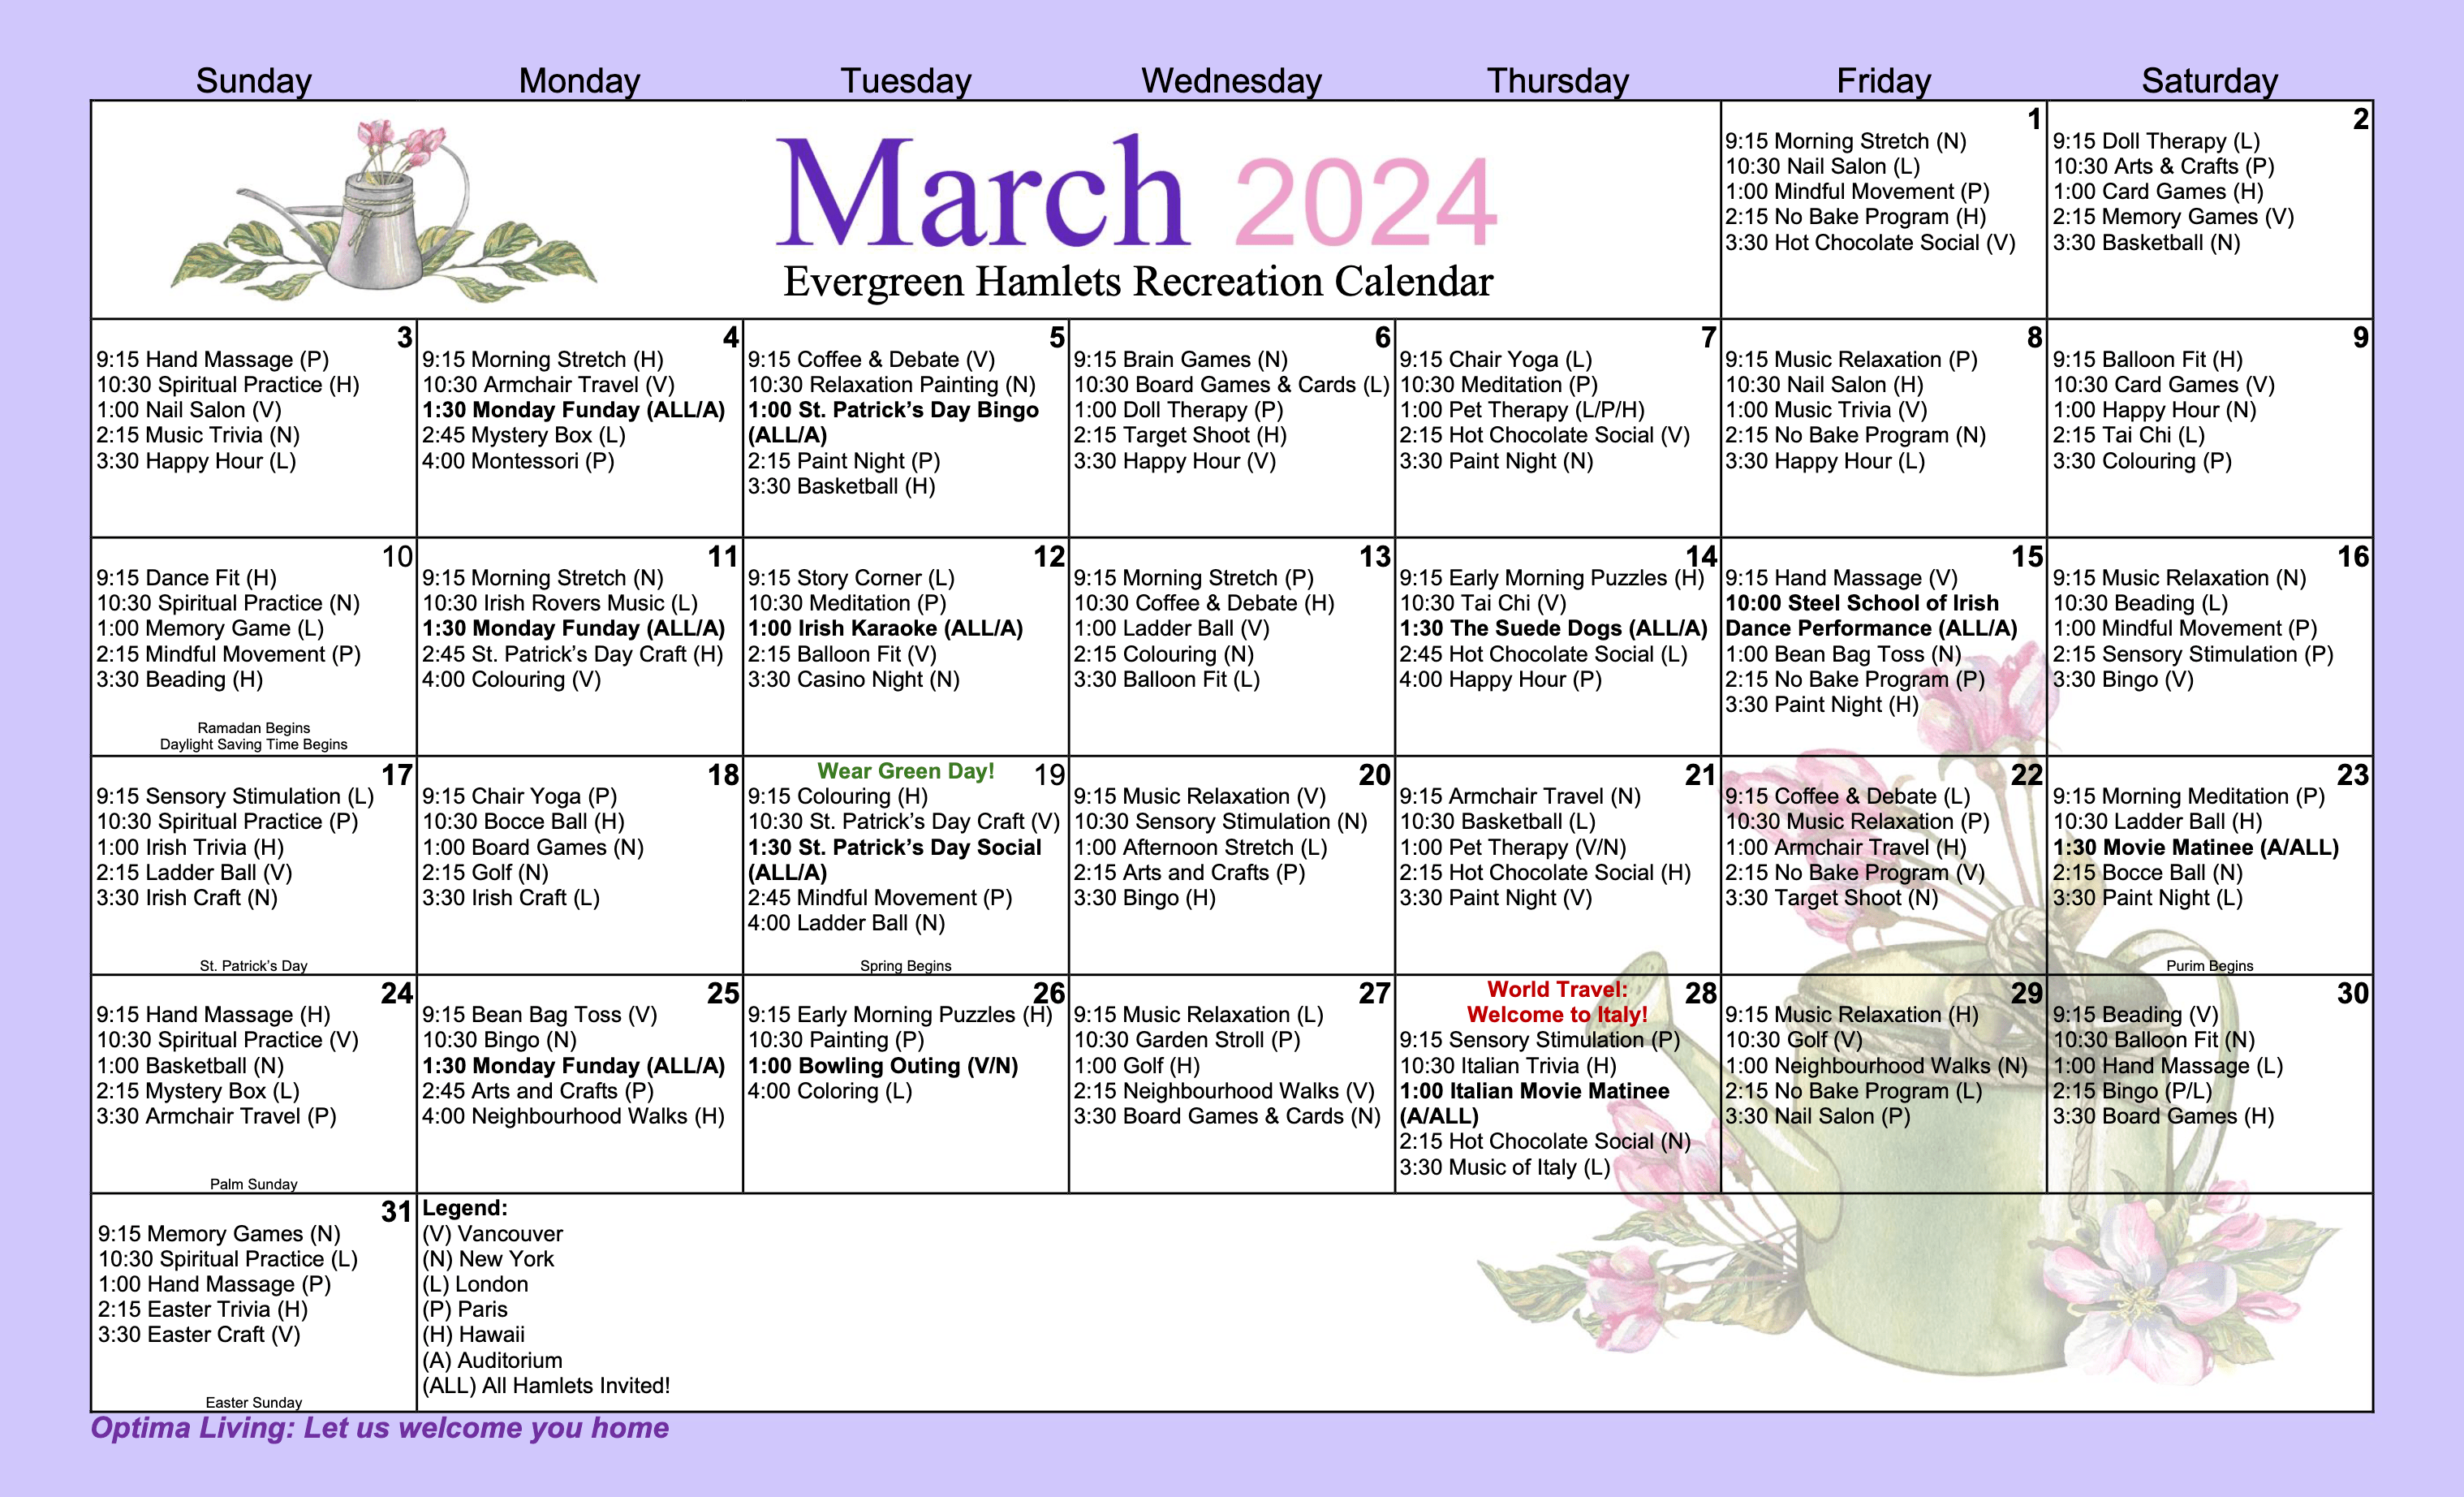 The Evergreen Hamlets at Fleetwood March 2024 event calendar